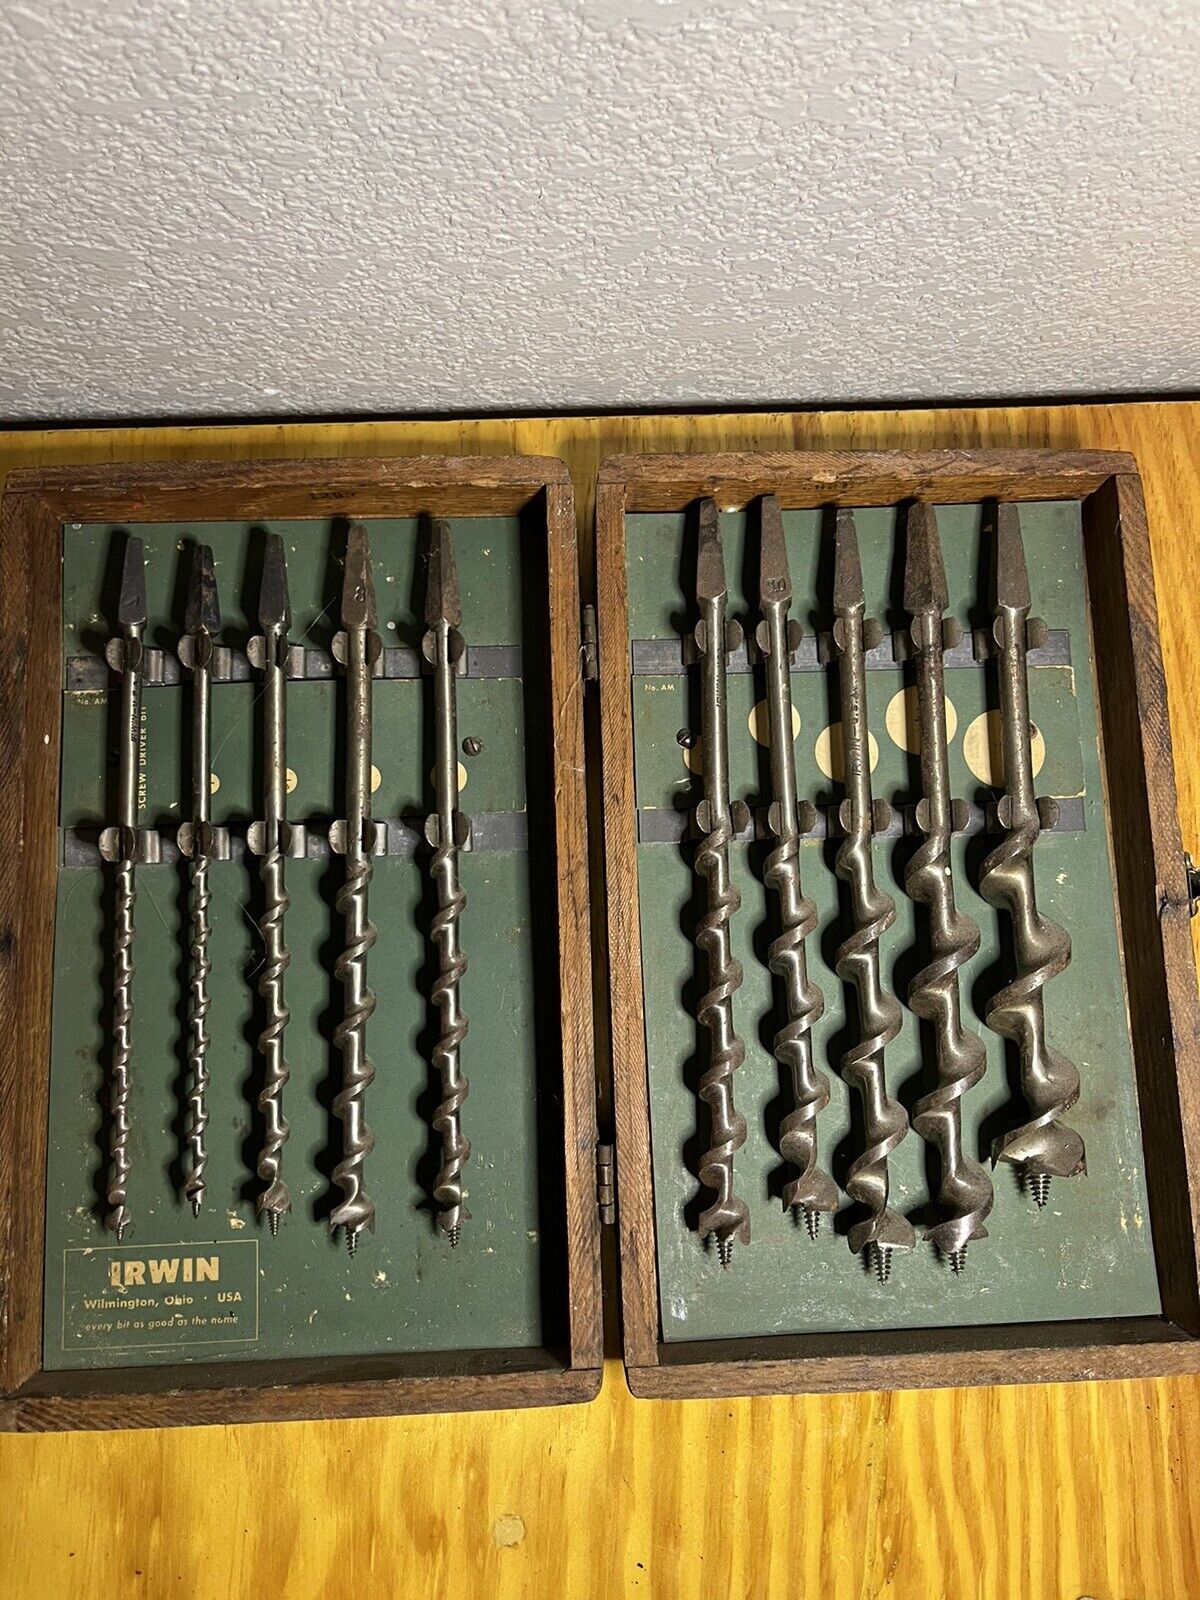 Irwin 10 Piece Auger Drill Bit Set Complete In Wooden Box